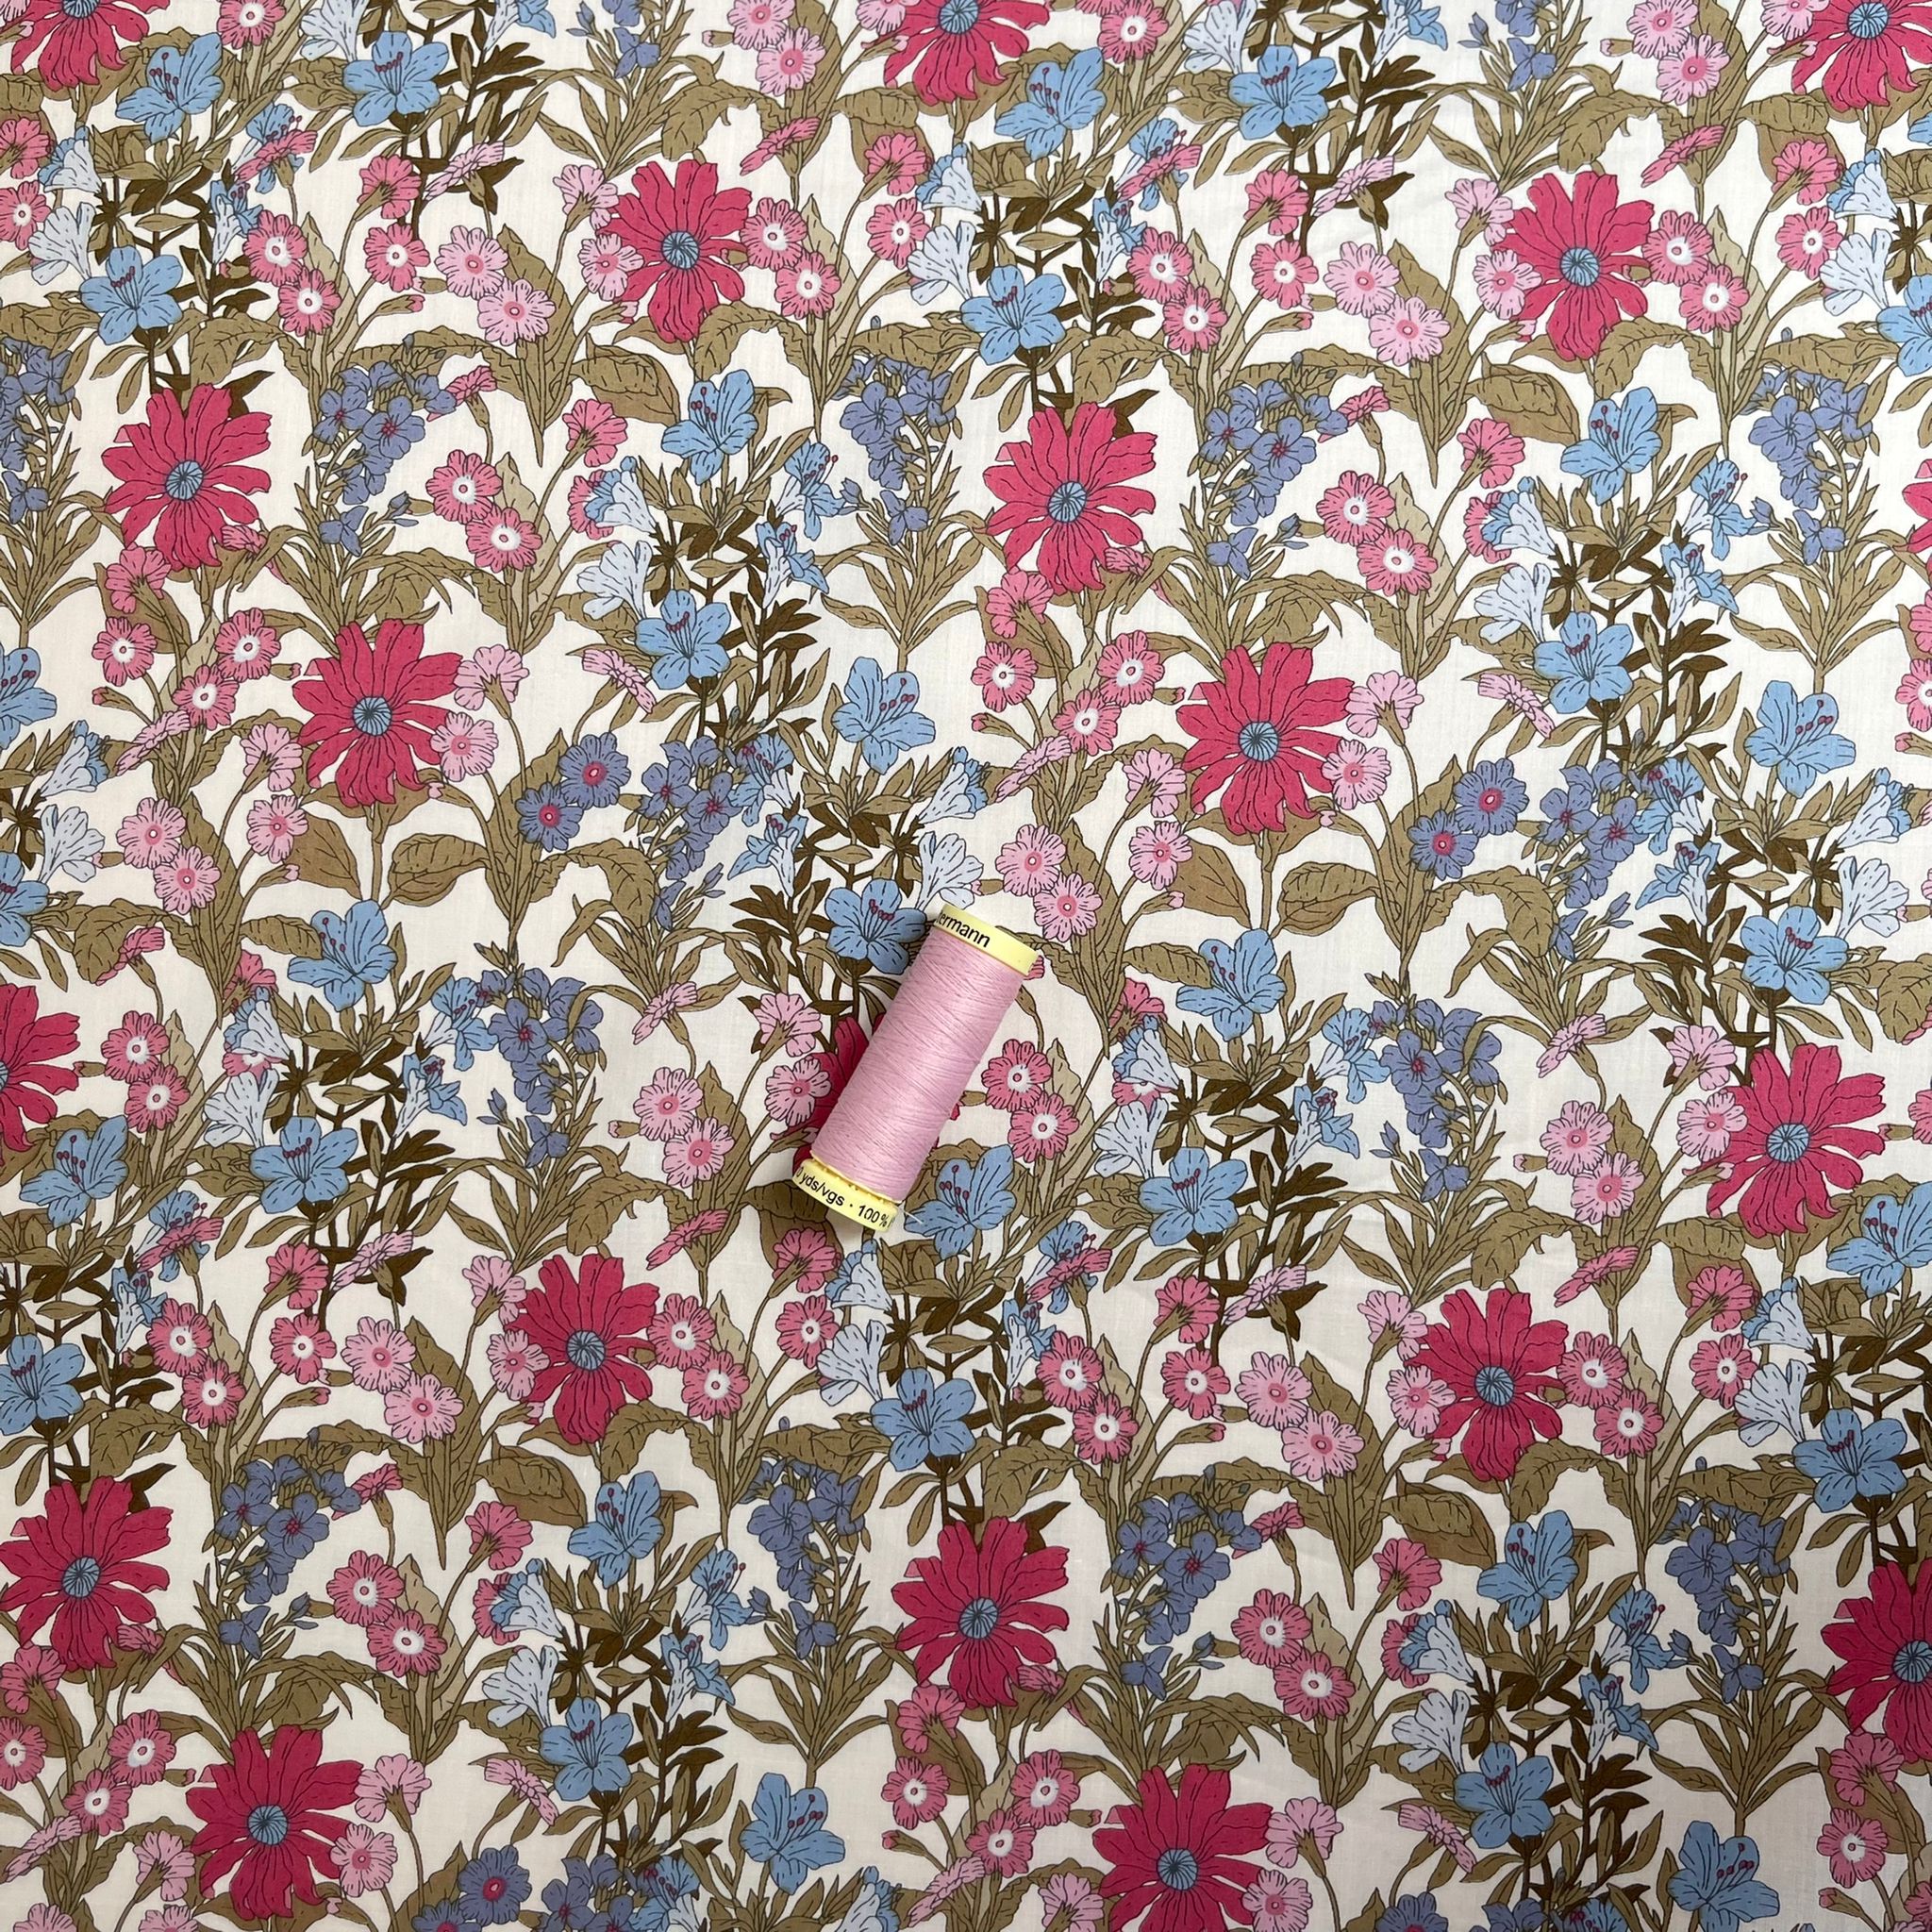 Summer Wildflower Cotton Lawn Fabric